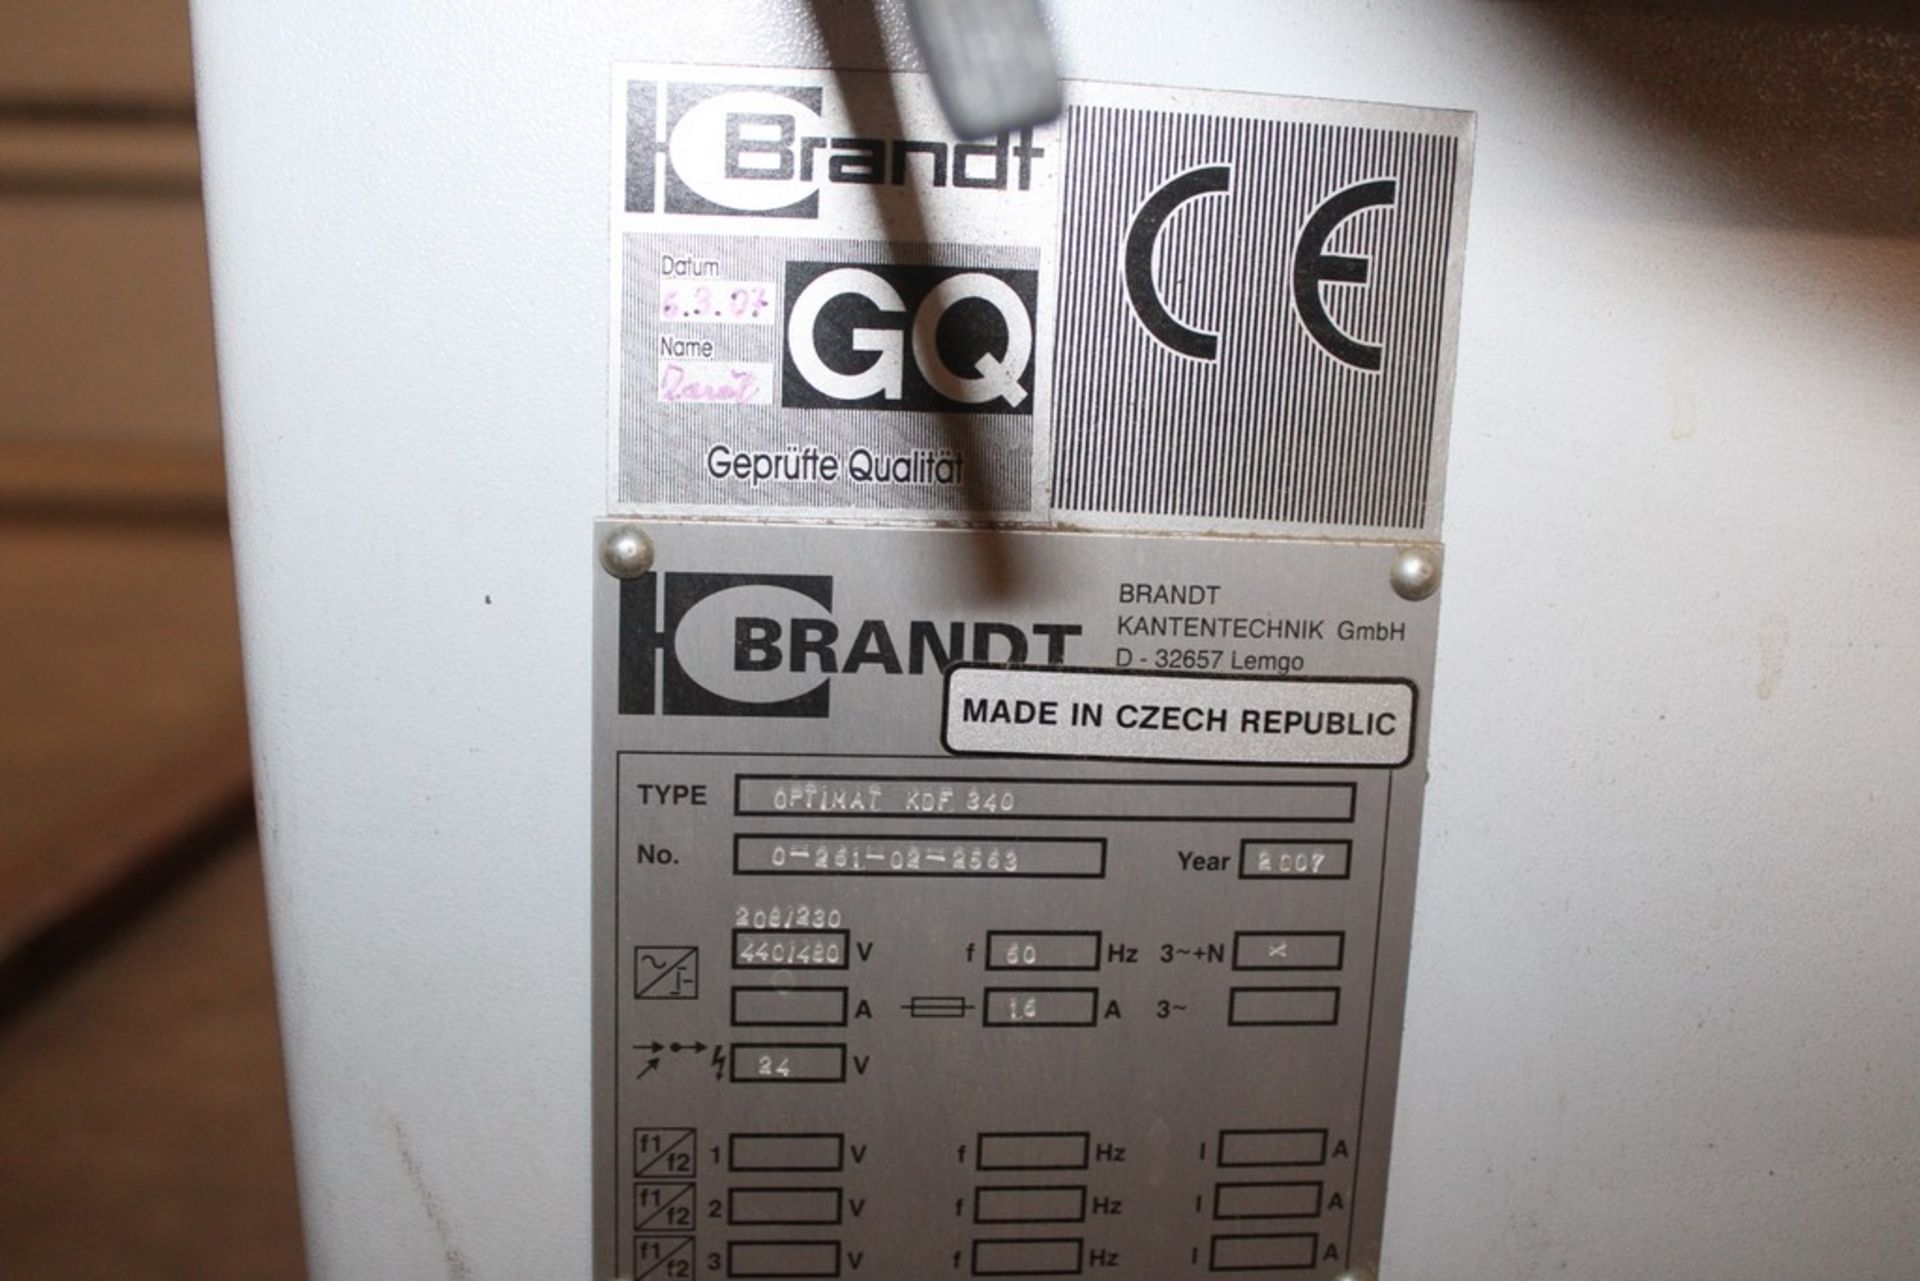 BRANDT MODEL OPTIMAT KDF-340 EDGE BANDING MACHINE, S/N 0-261-02-2563 (NEW 2007) - Image 4 of 7